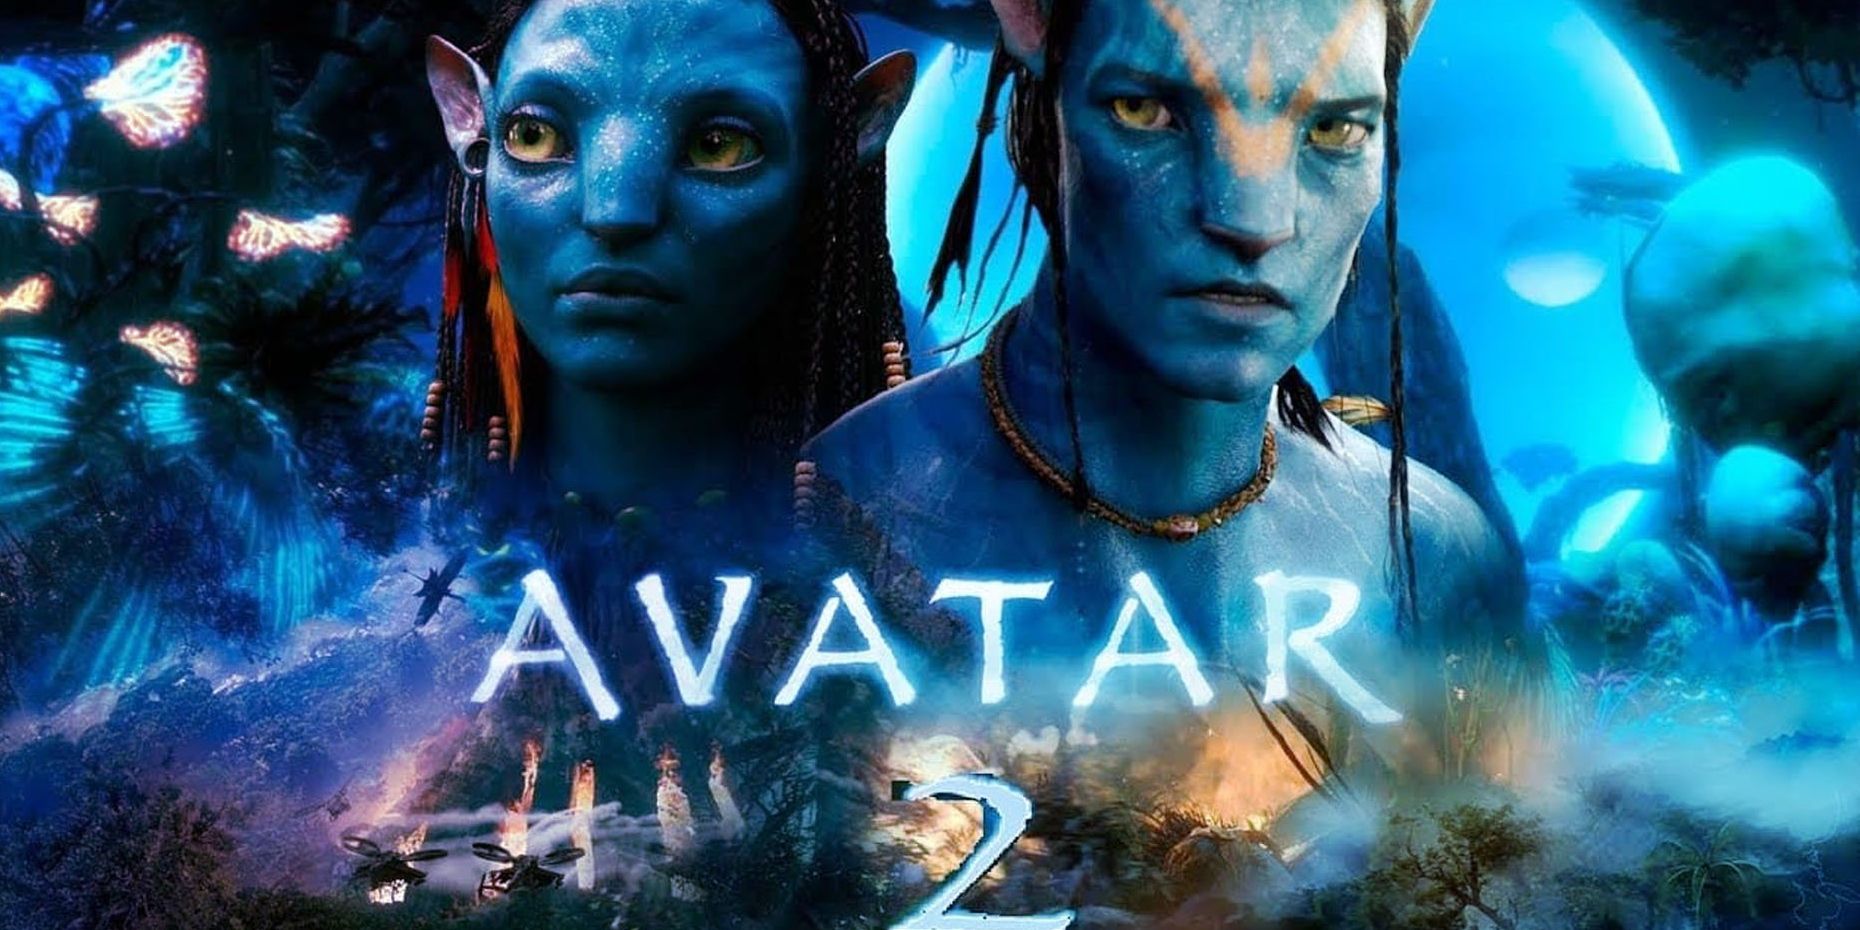 Avatar 2 Movie Poster